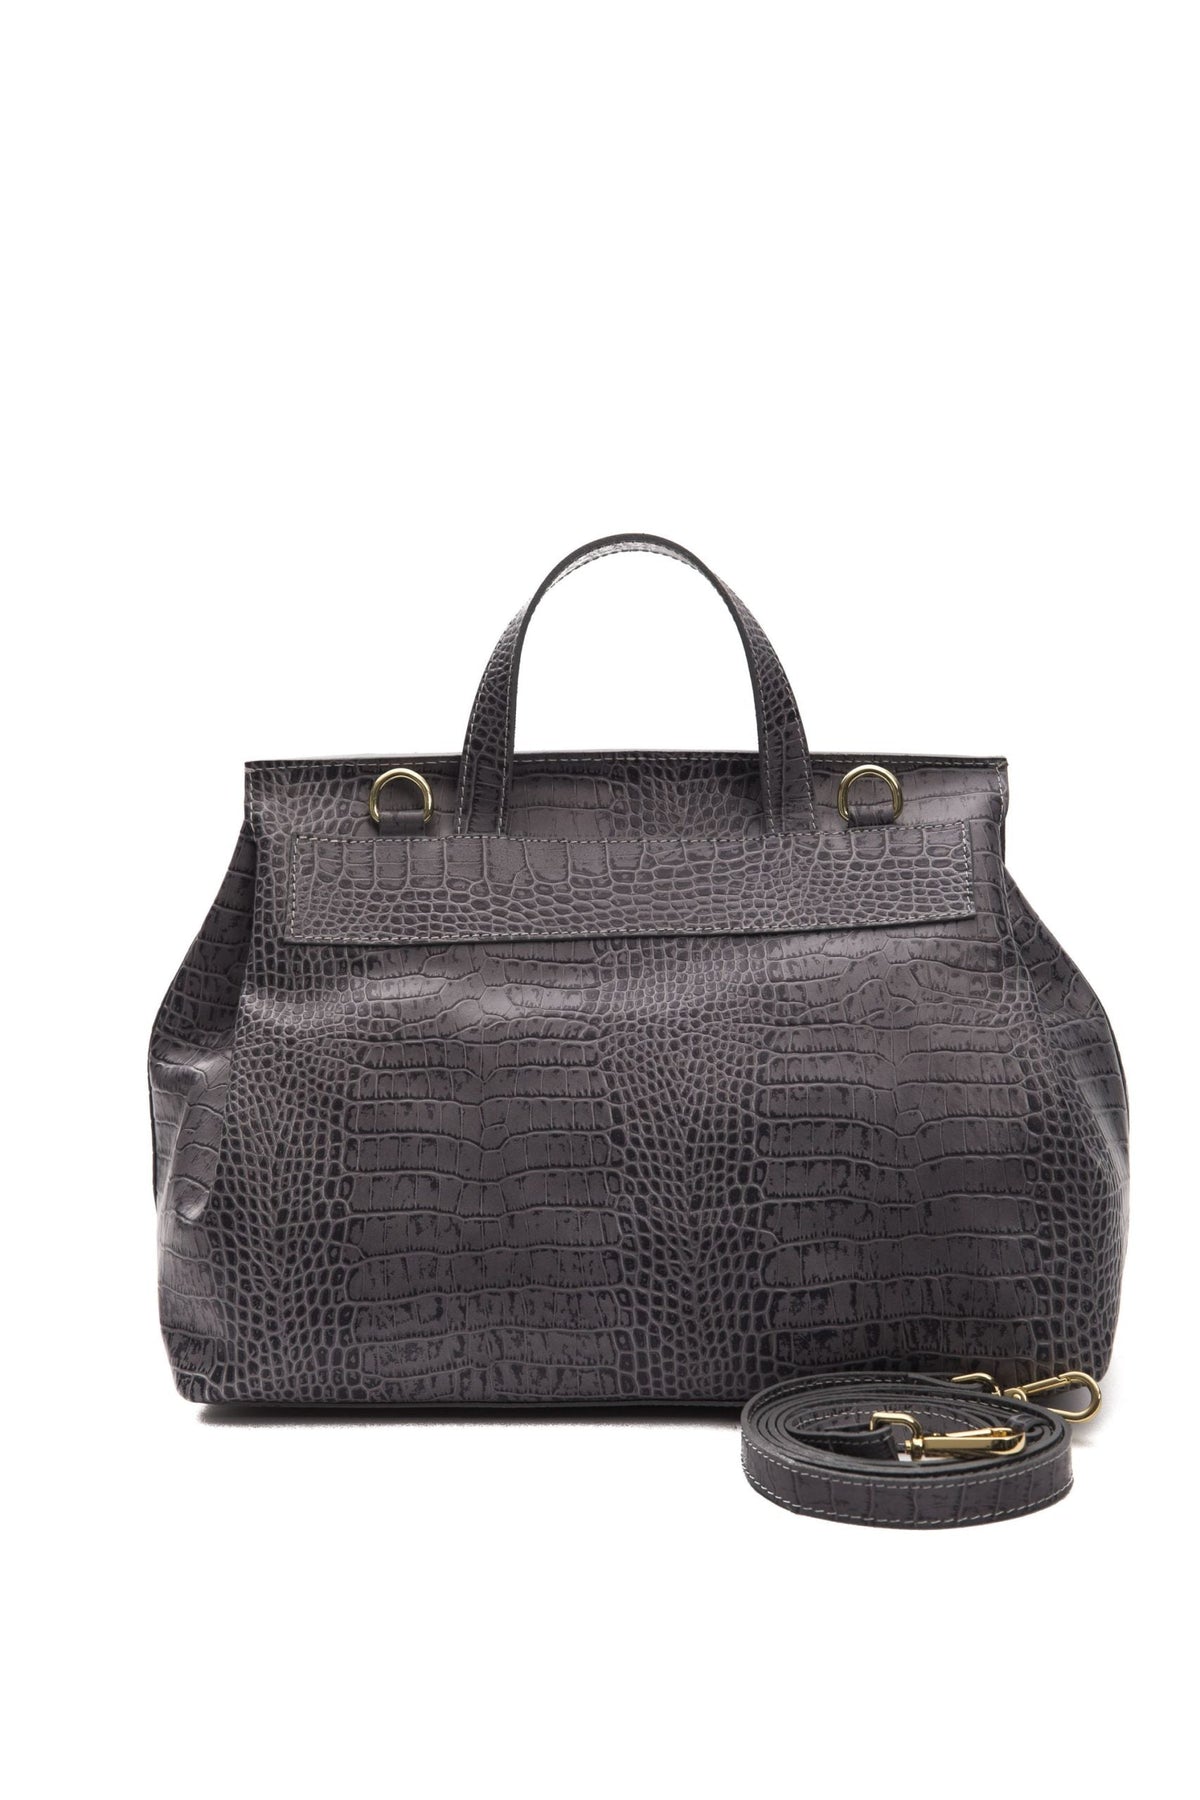 Gray Leather Handbag by Faz